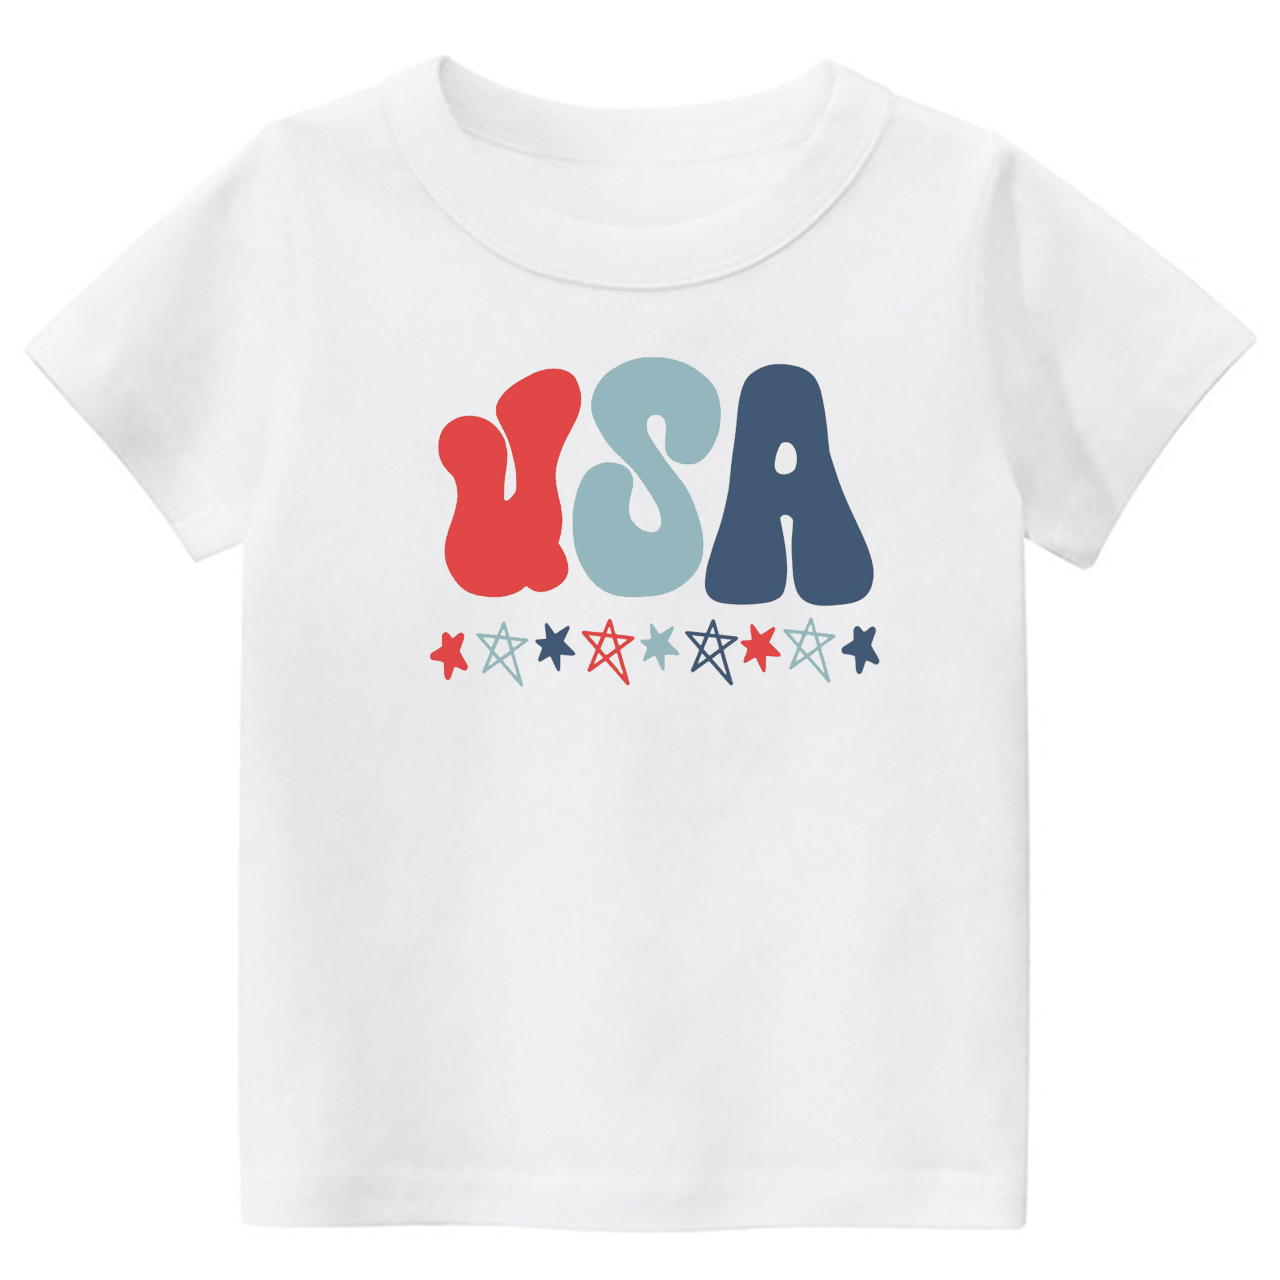 USA Stars Independence Day Toddler Shirt